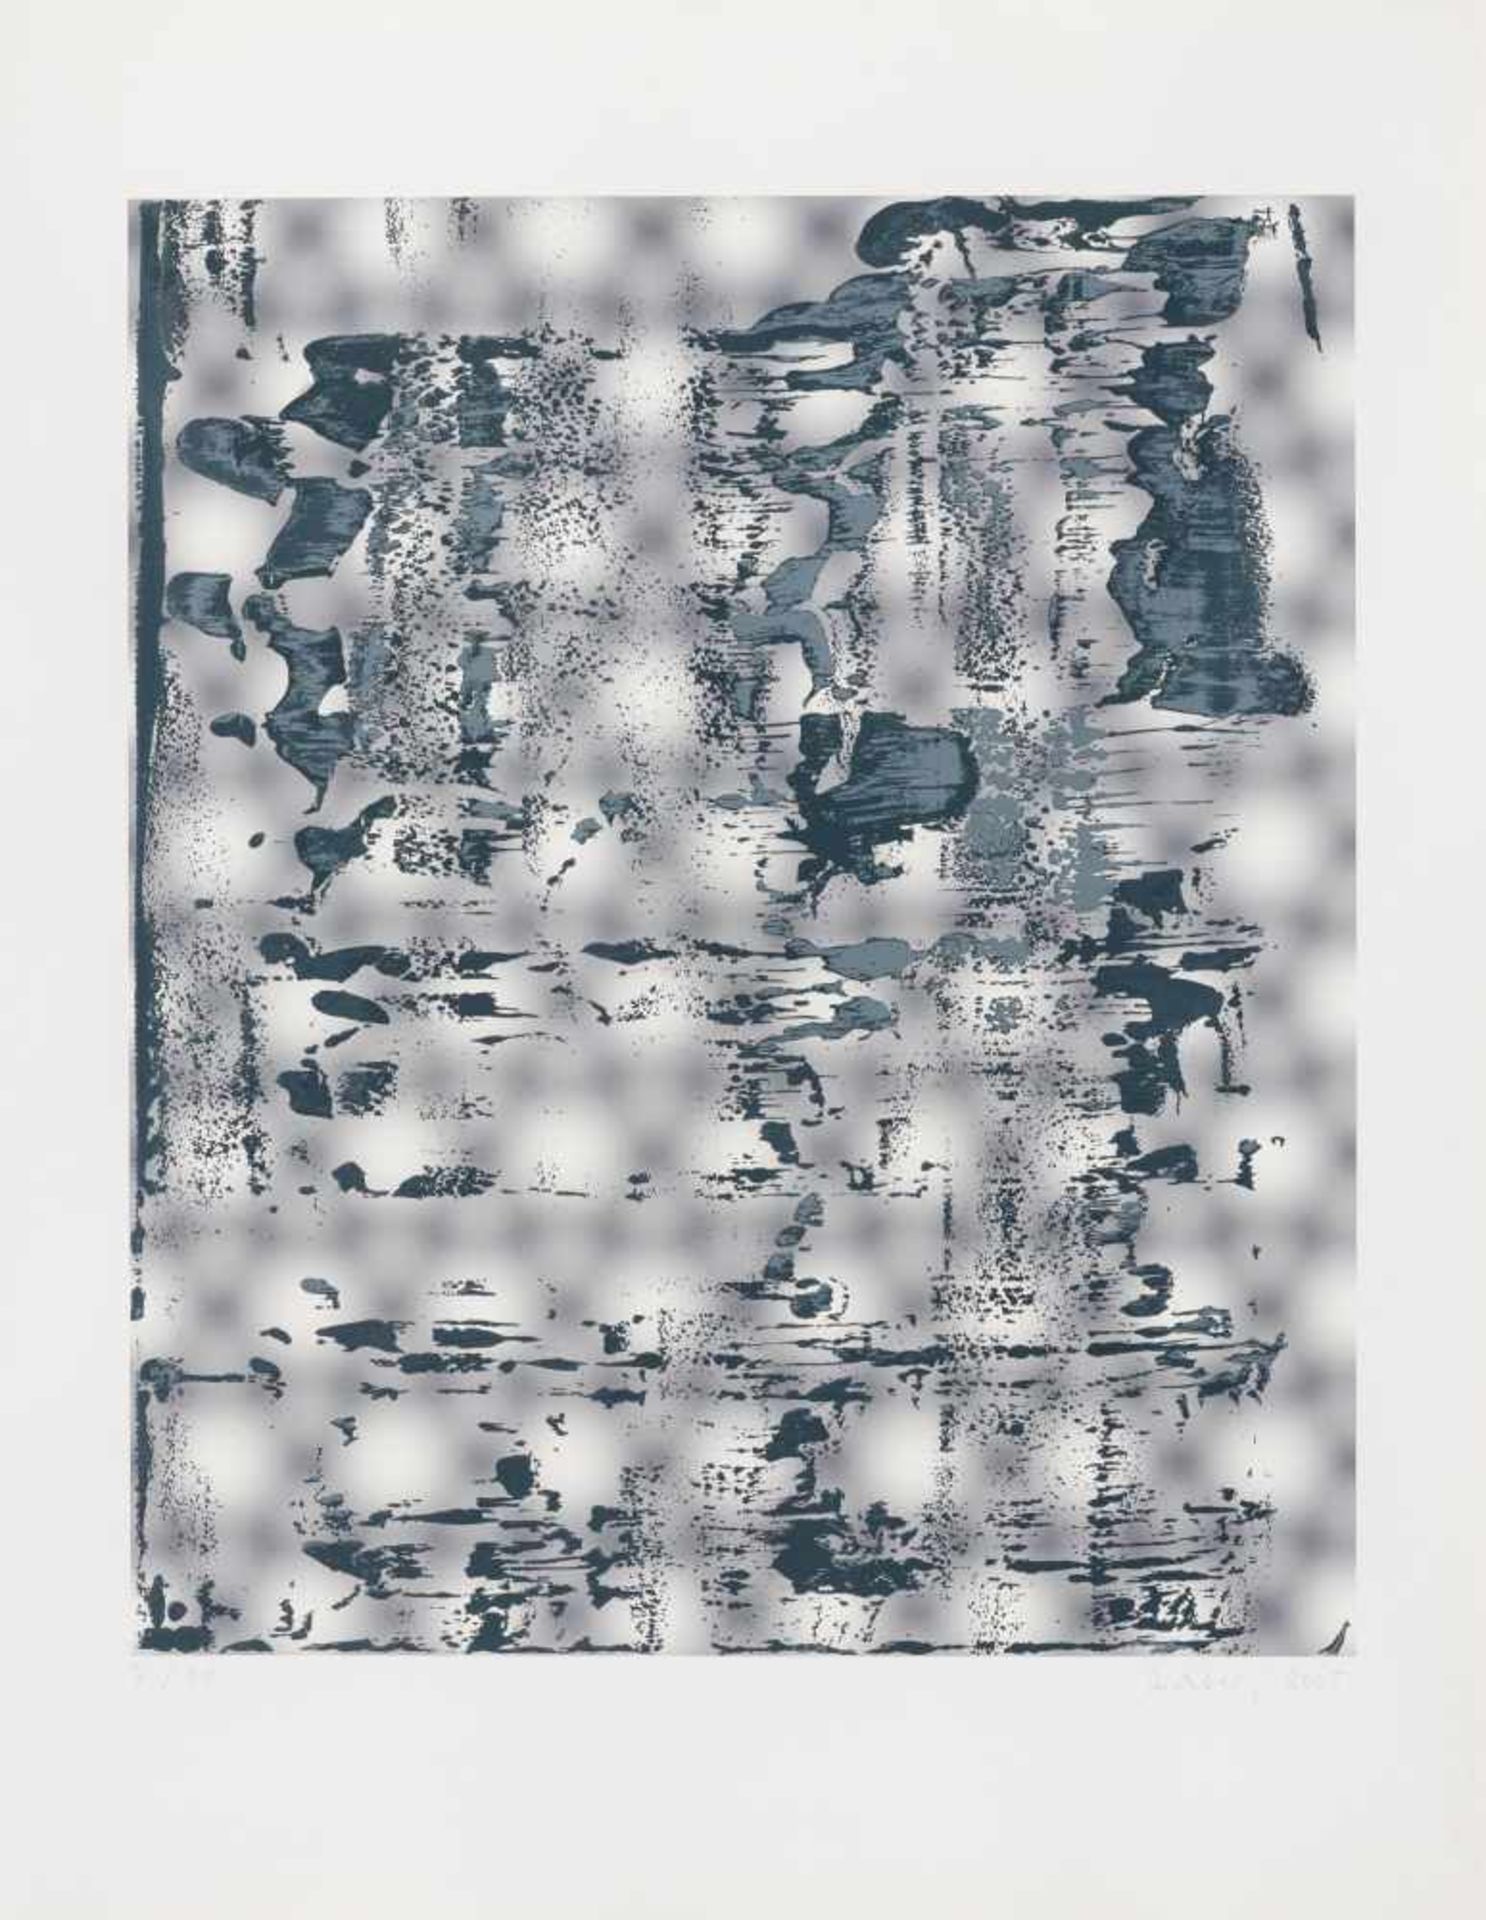 Richter, Gerhard1932 DresdenGraphit. 2005. Colour silkscreen on offset on laid paper. 72 x 61cm (